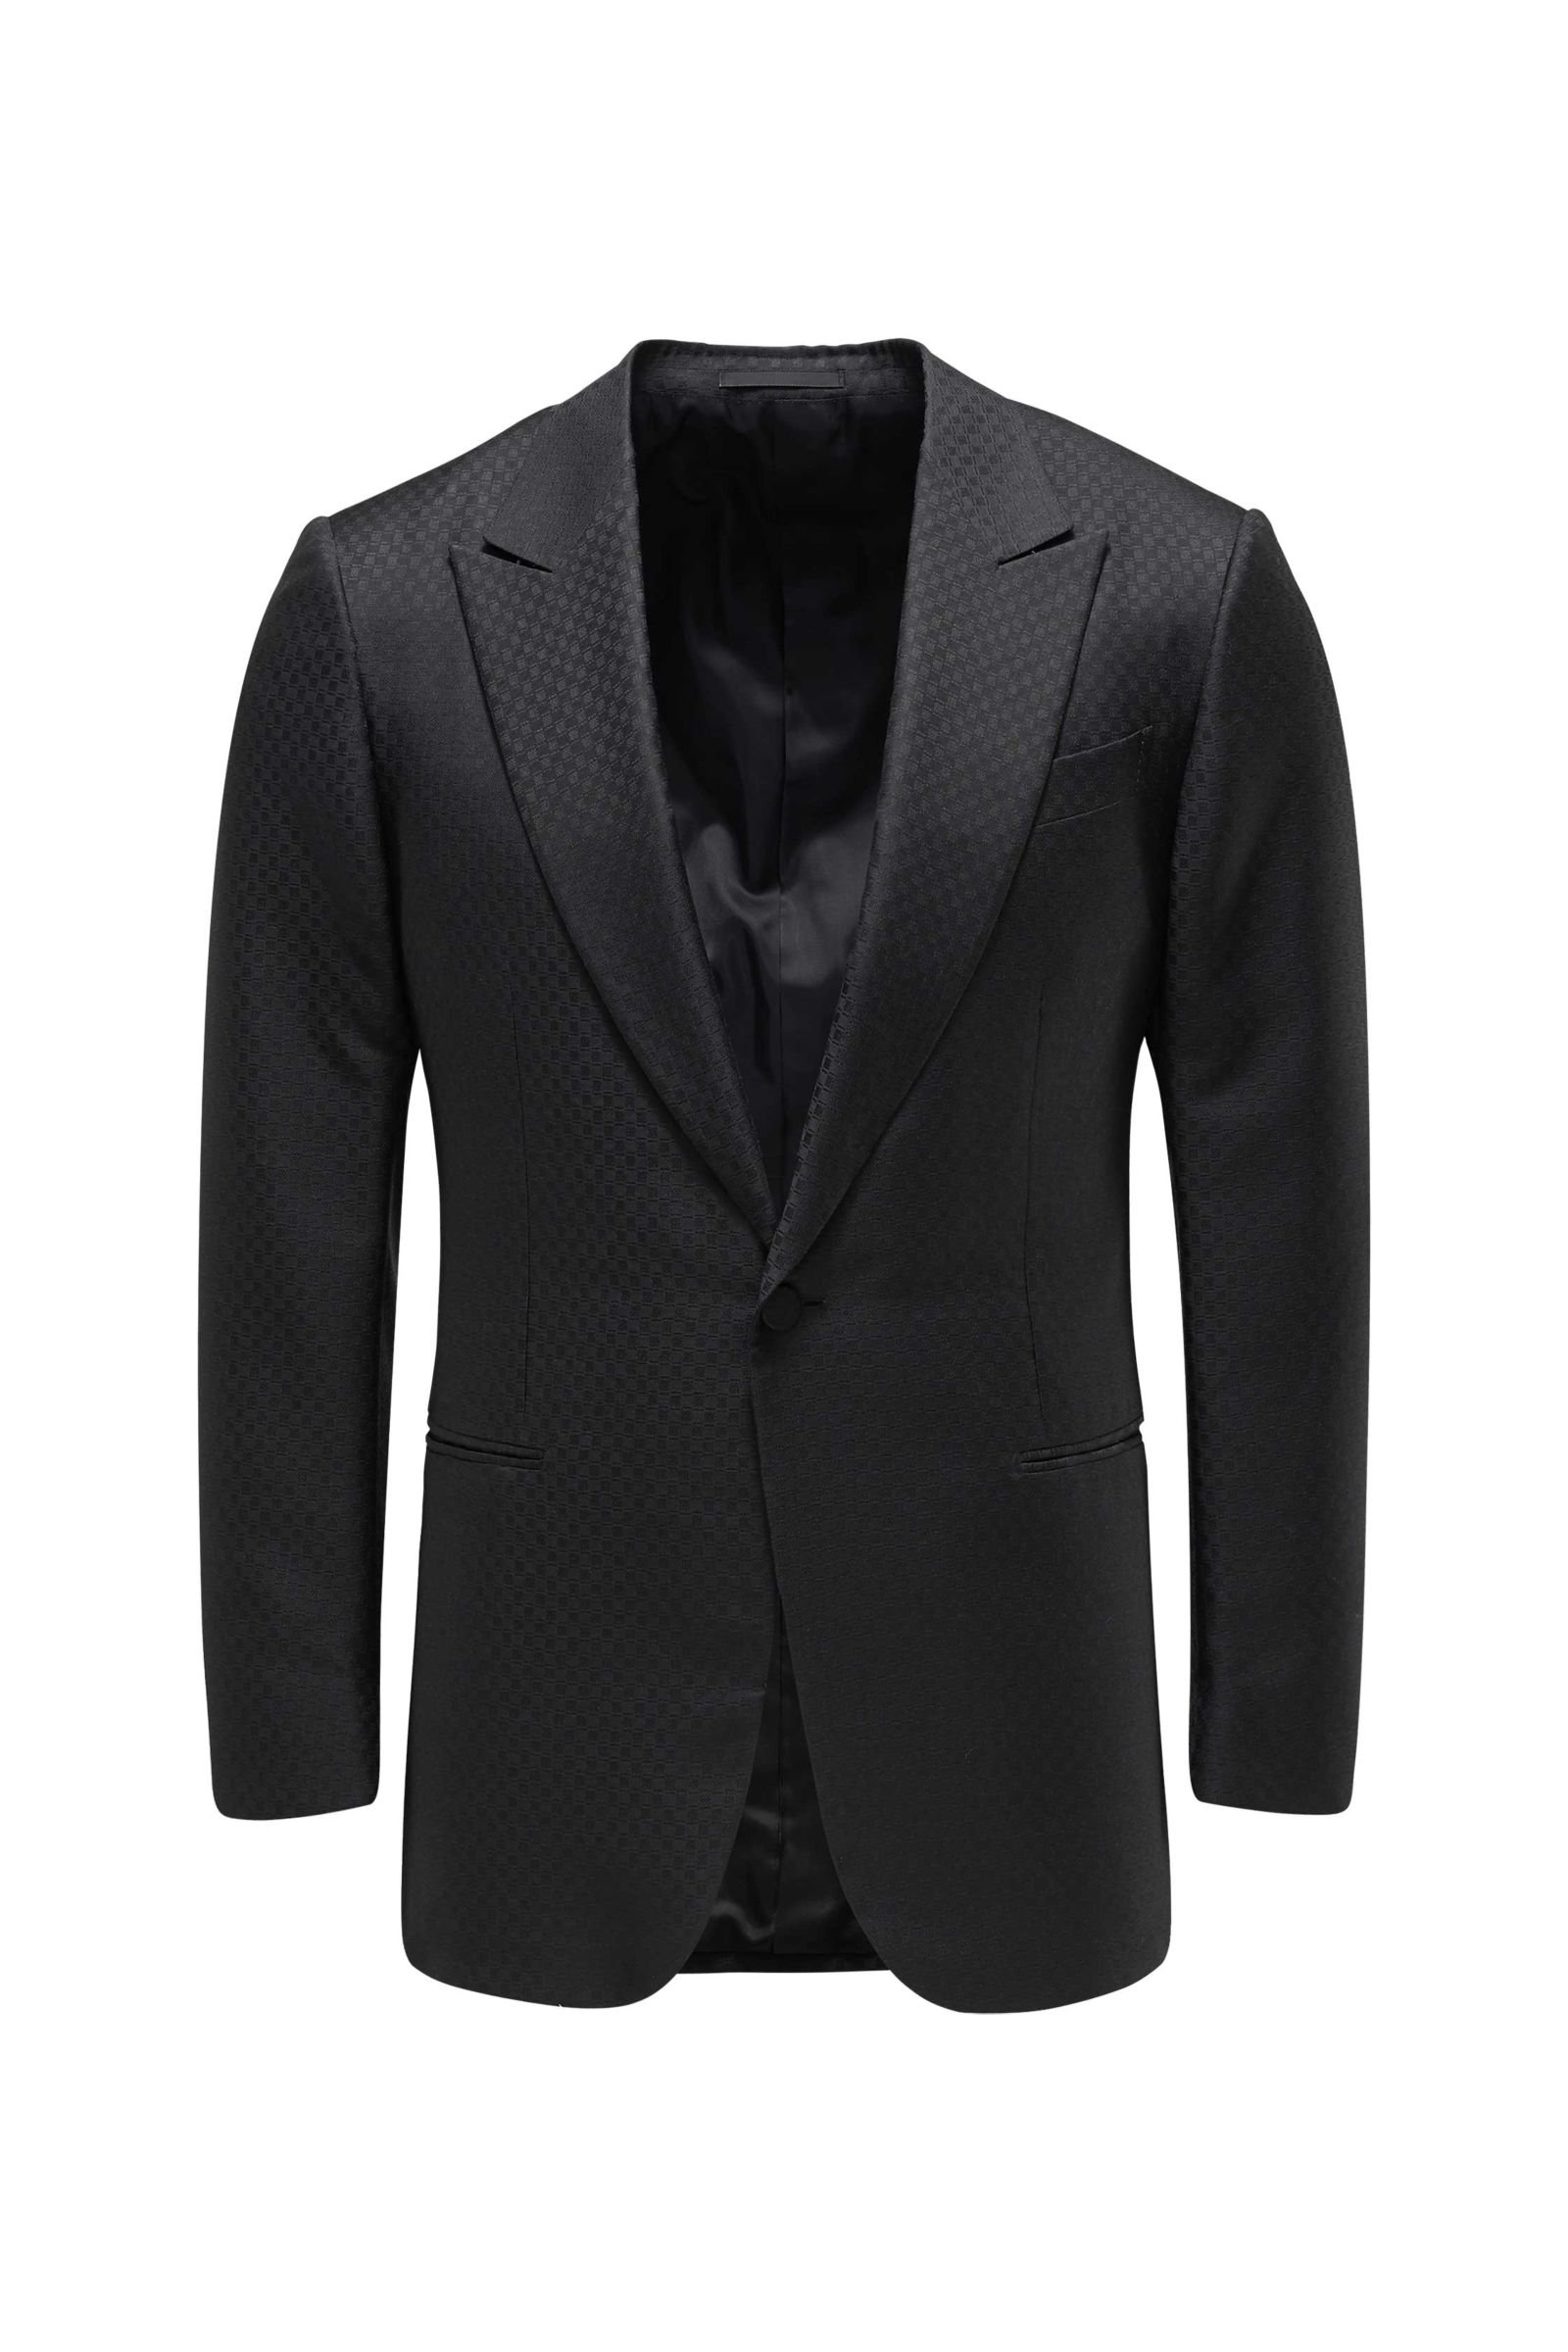 ERMENEGILDO ZEGNA tuxedo smart-casual jacket 'Venezia' black checked ...